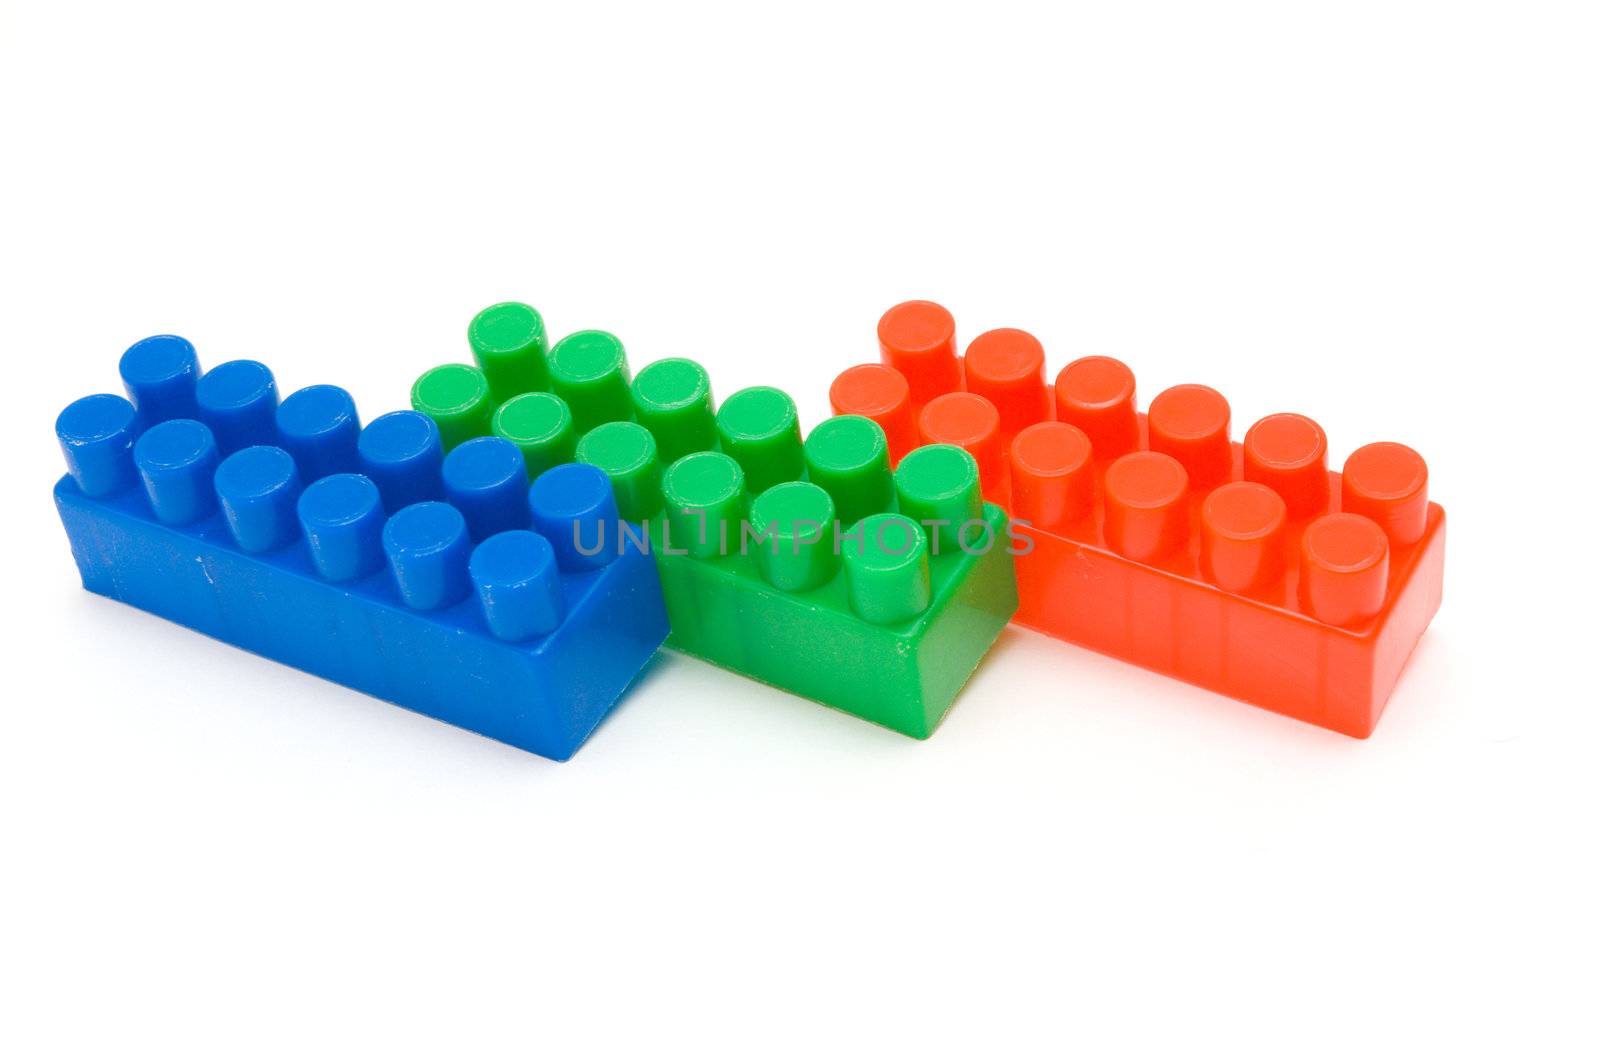 toy blocks by semenovp